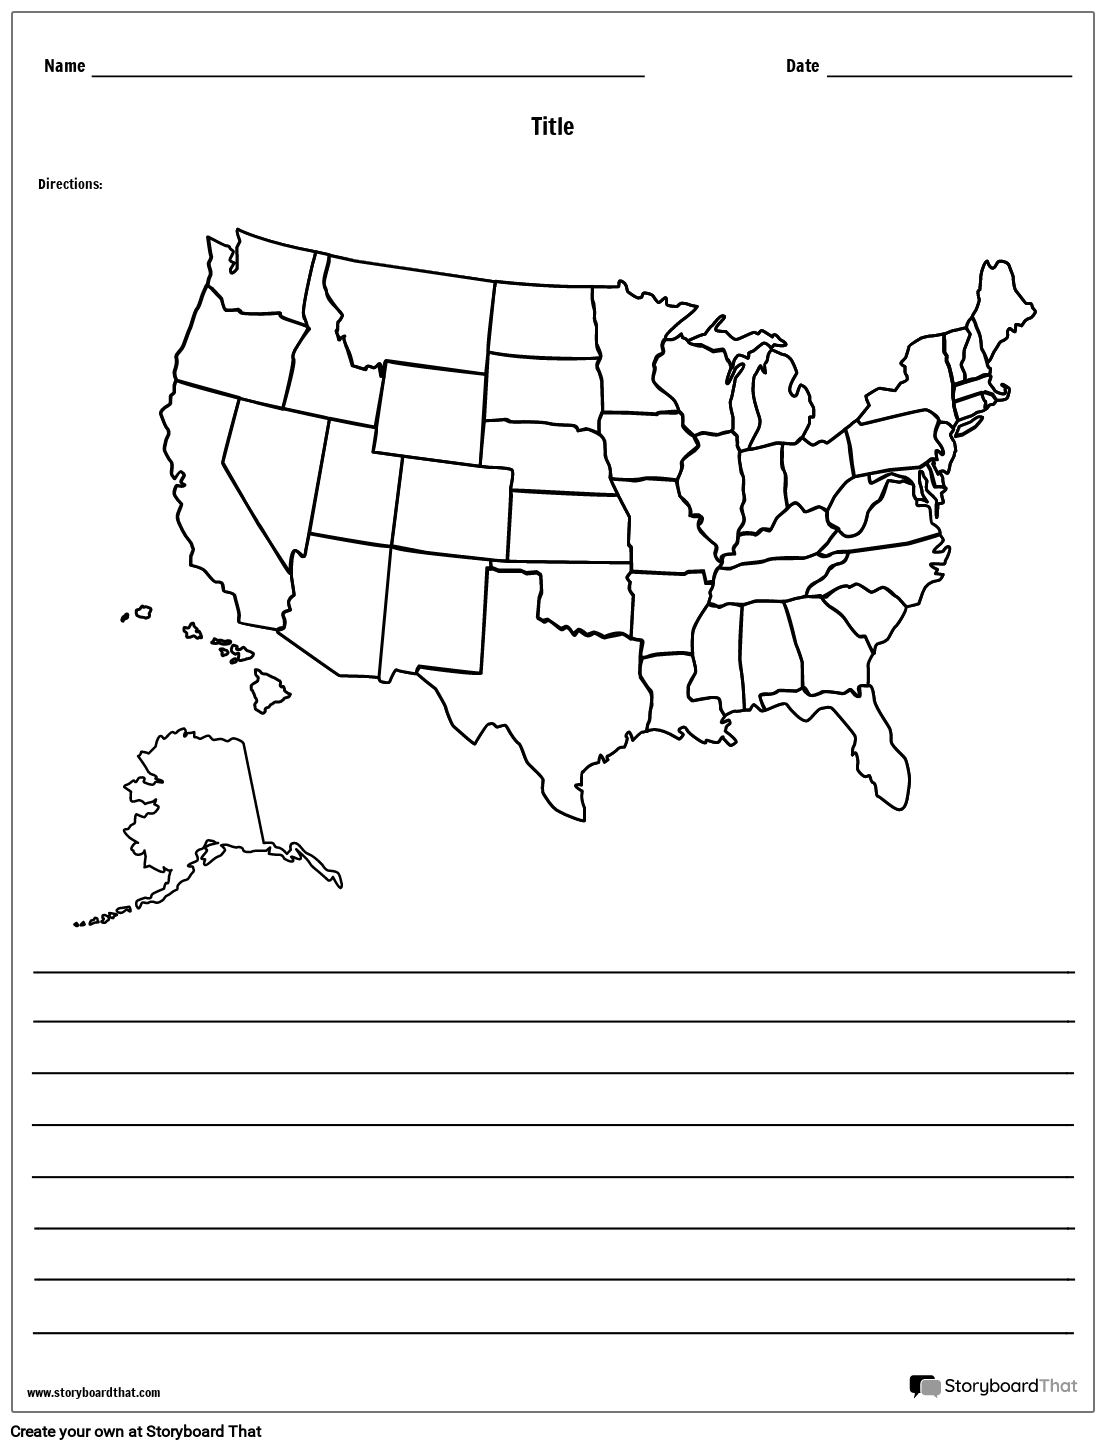 संयुक्त राज्य अमेरिका का नक्शा - लाइनों के साथ